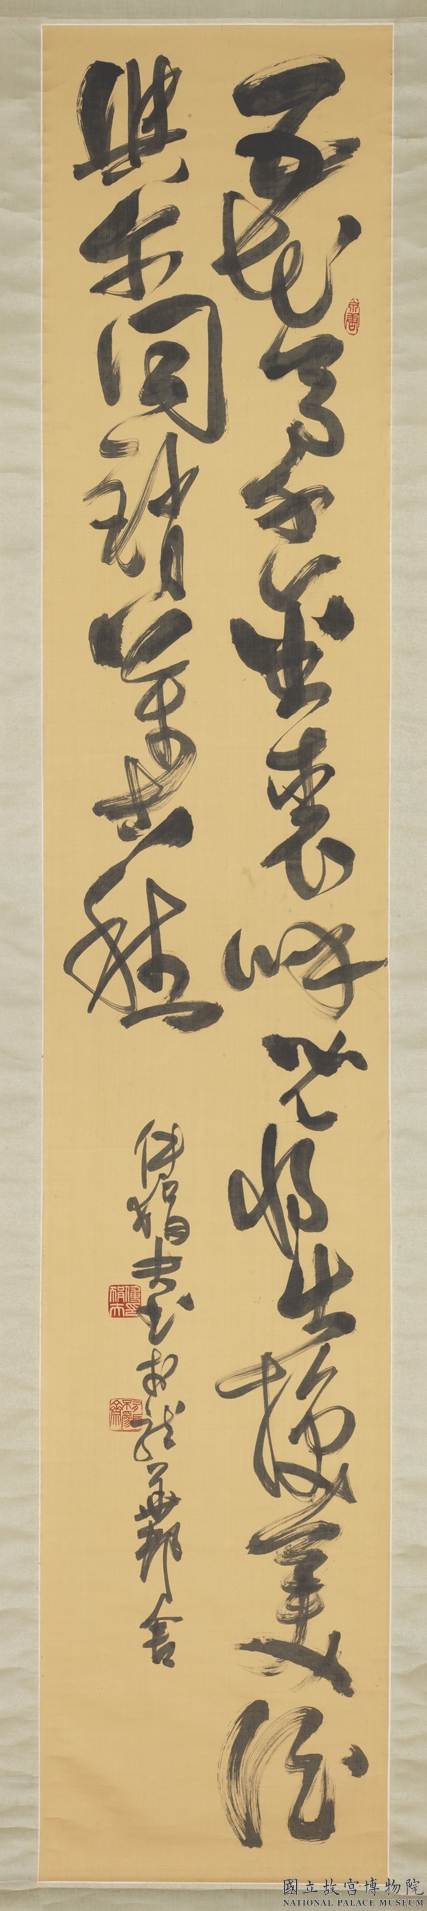 Lines of Poetry by Li Bai